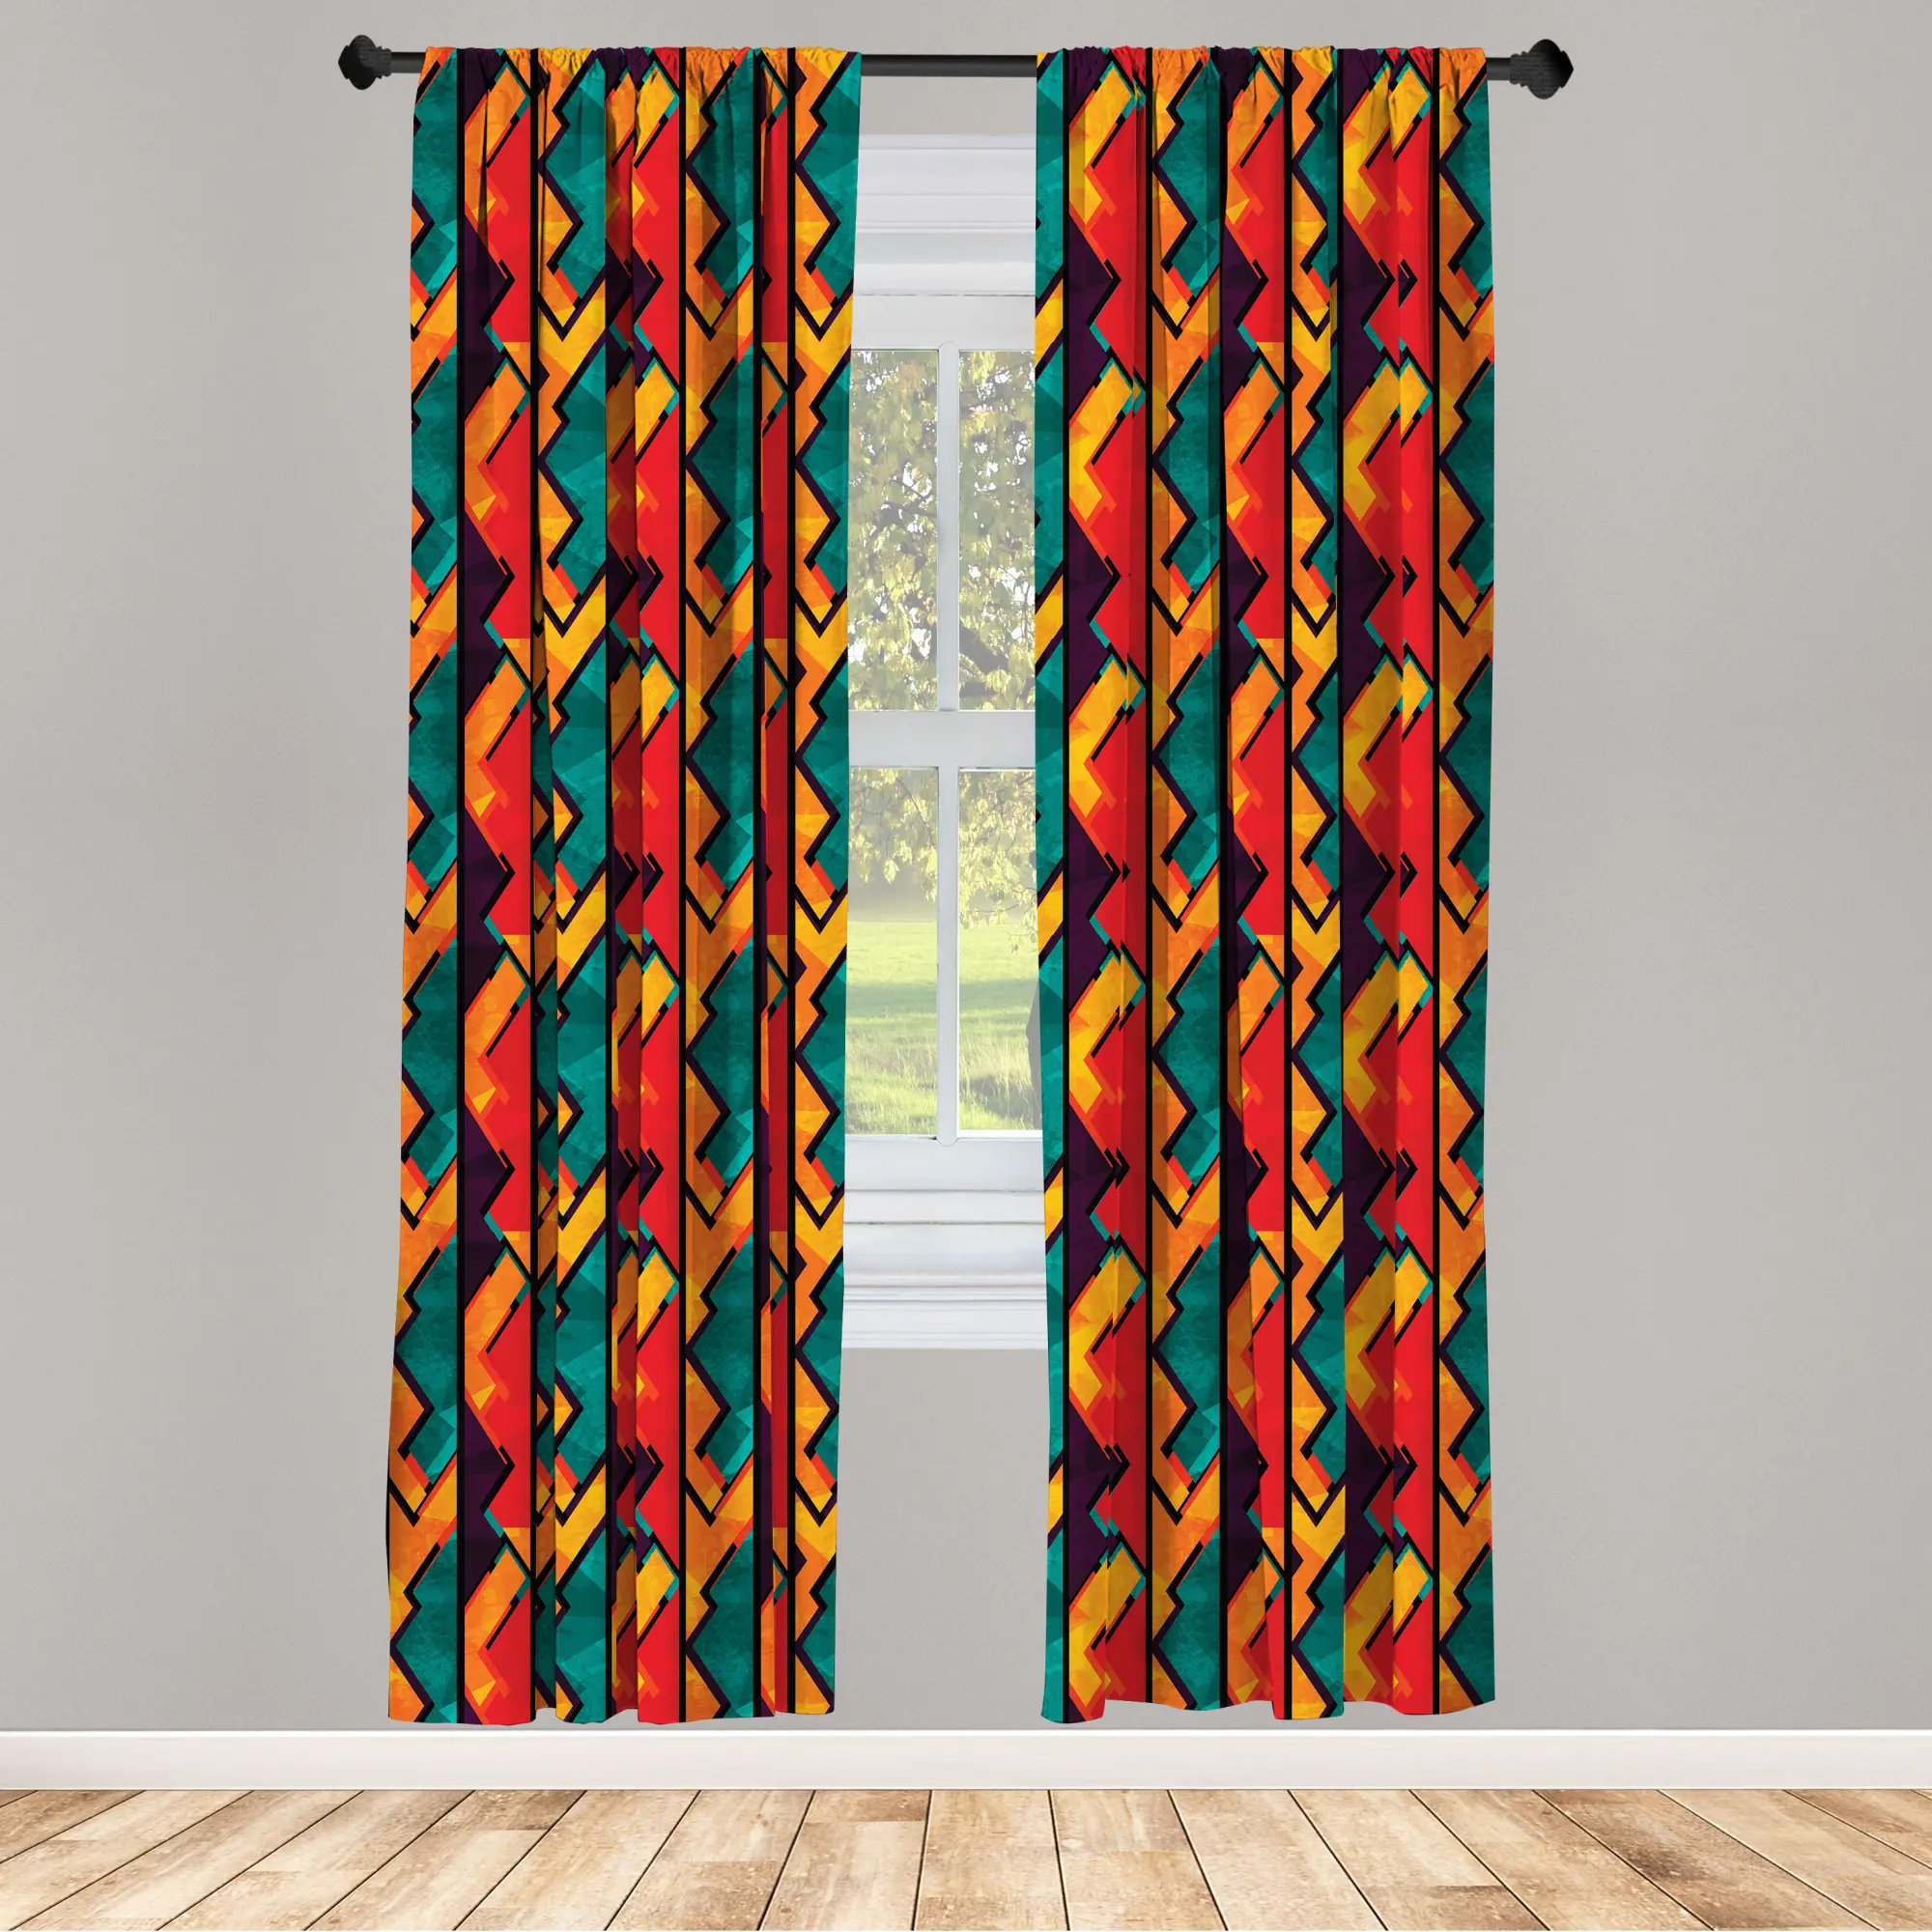 Grunge Panel Curtain, Geometric Pattern Antique Design Elements Mosaic Style Art, Lightweight Window Treatment Living Room Bedroom Decor, Teal Vermili